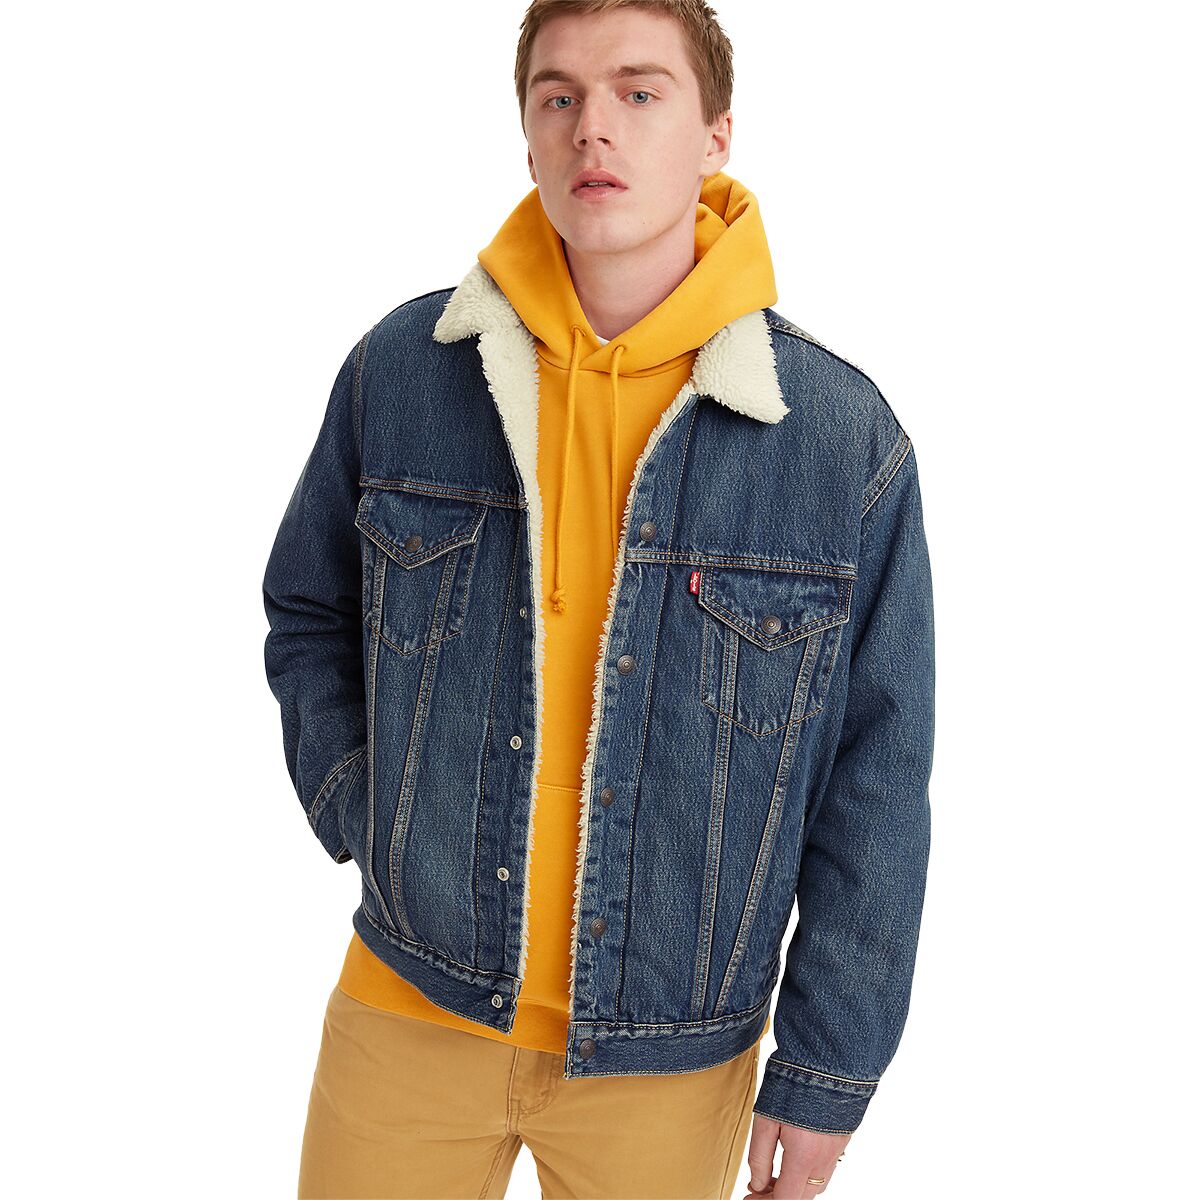 Levi's Vintage Fit Sherpa Trucker Jacket - Men's - Clothing